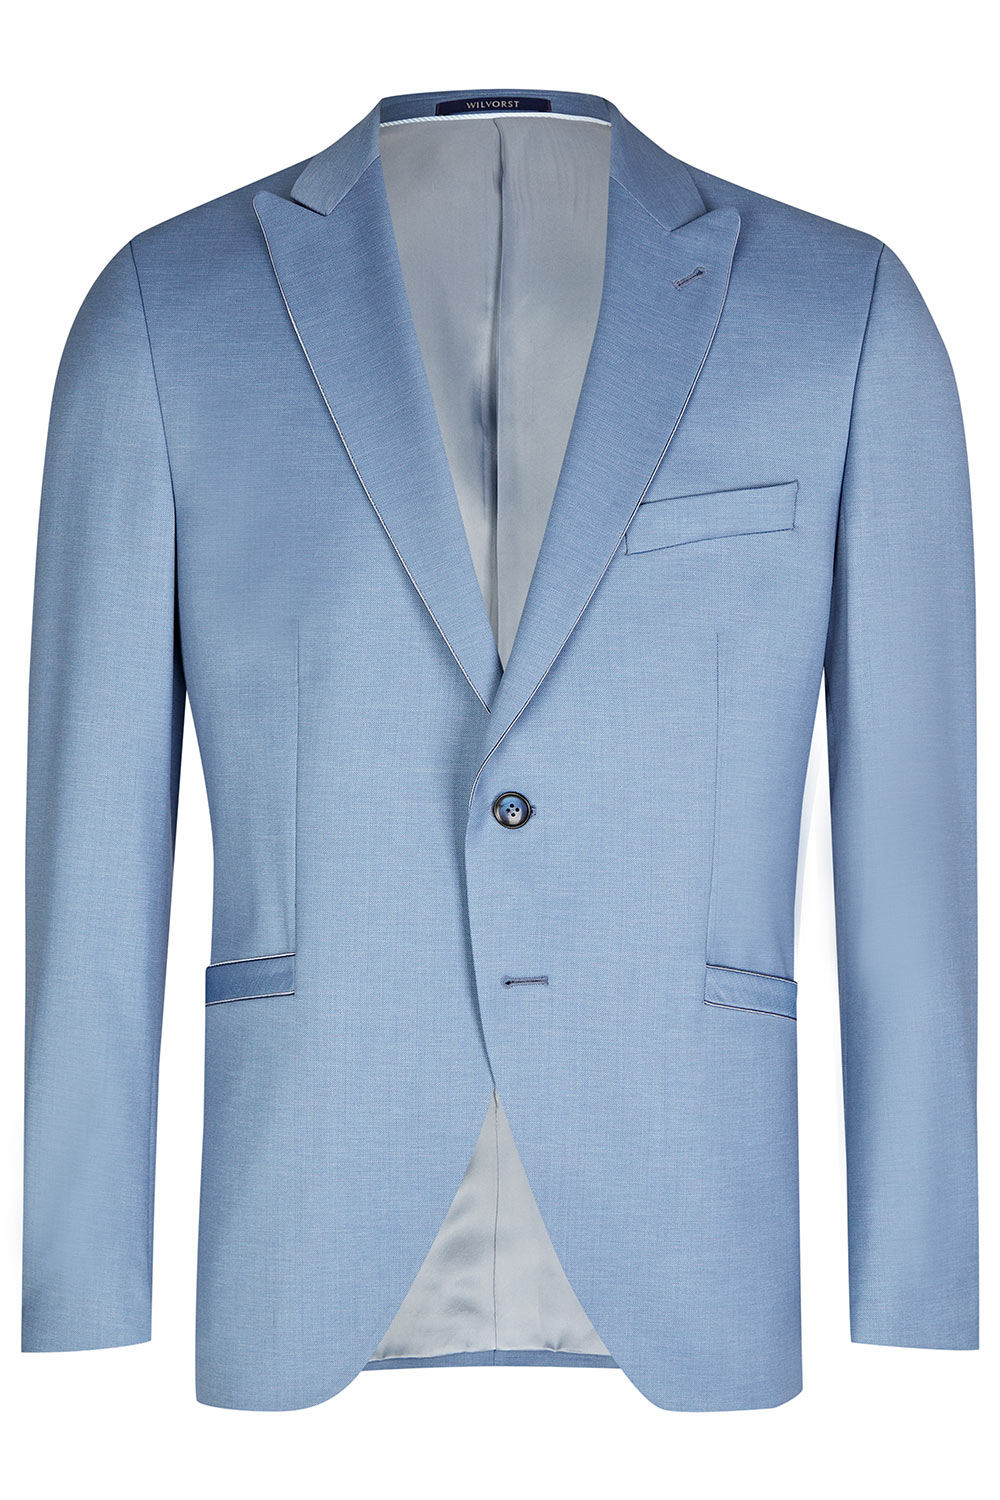 Light Blue 3 piece Wedding Suit - Tom Murphy's Formal and Menswear